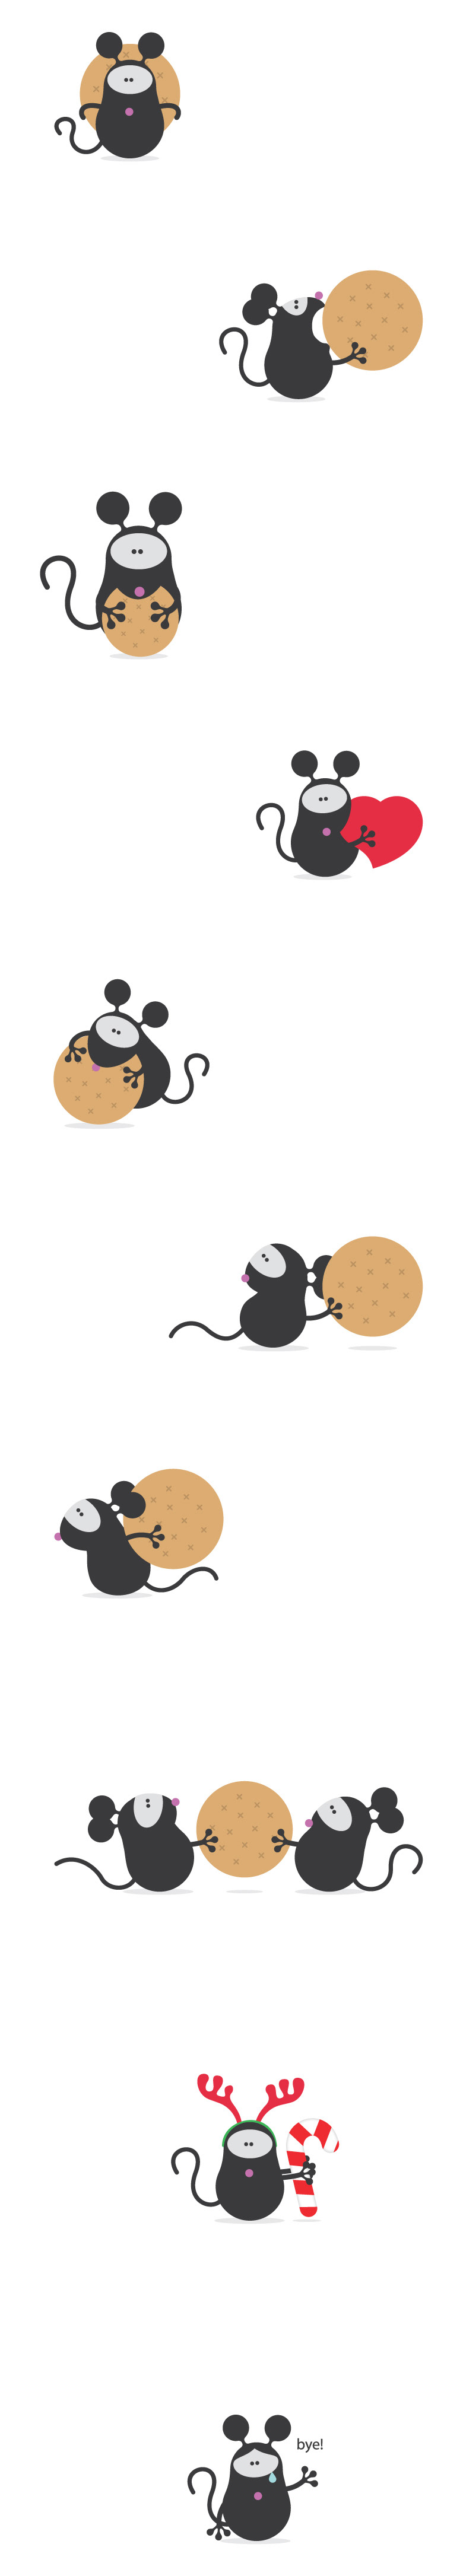 illustrating design cute little mice Character cartoon